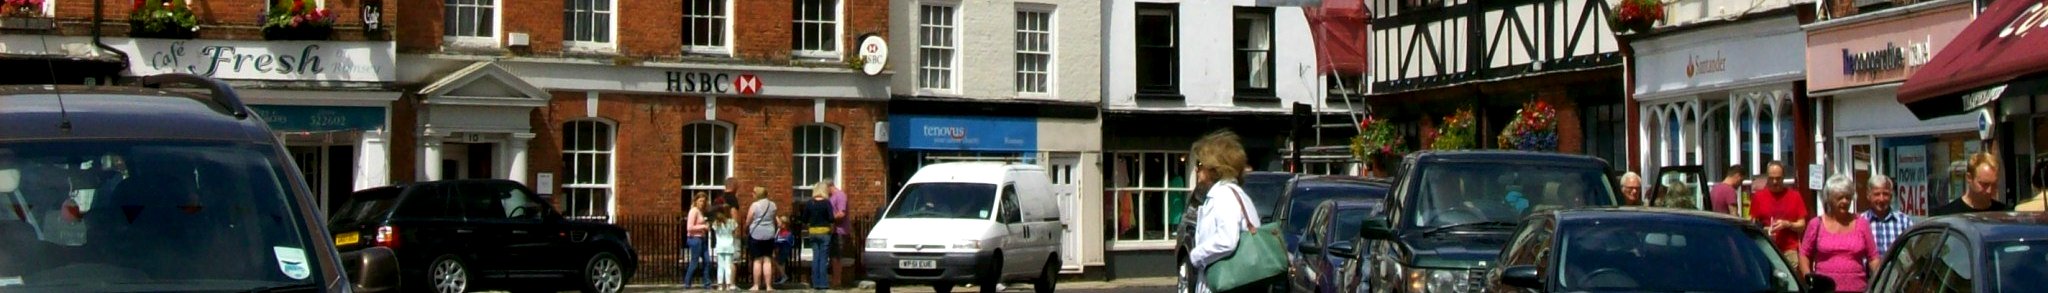 Romsey banner town centre